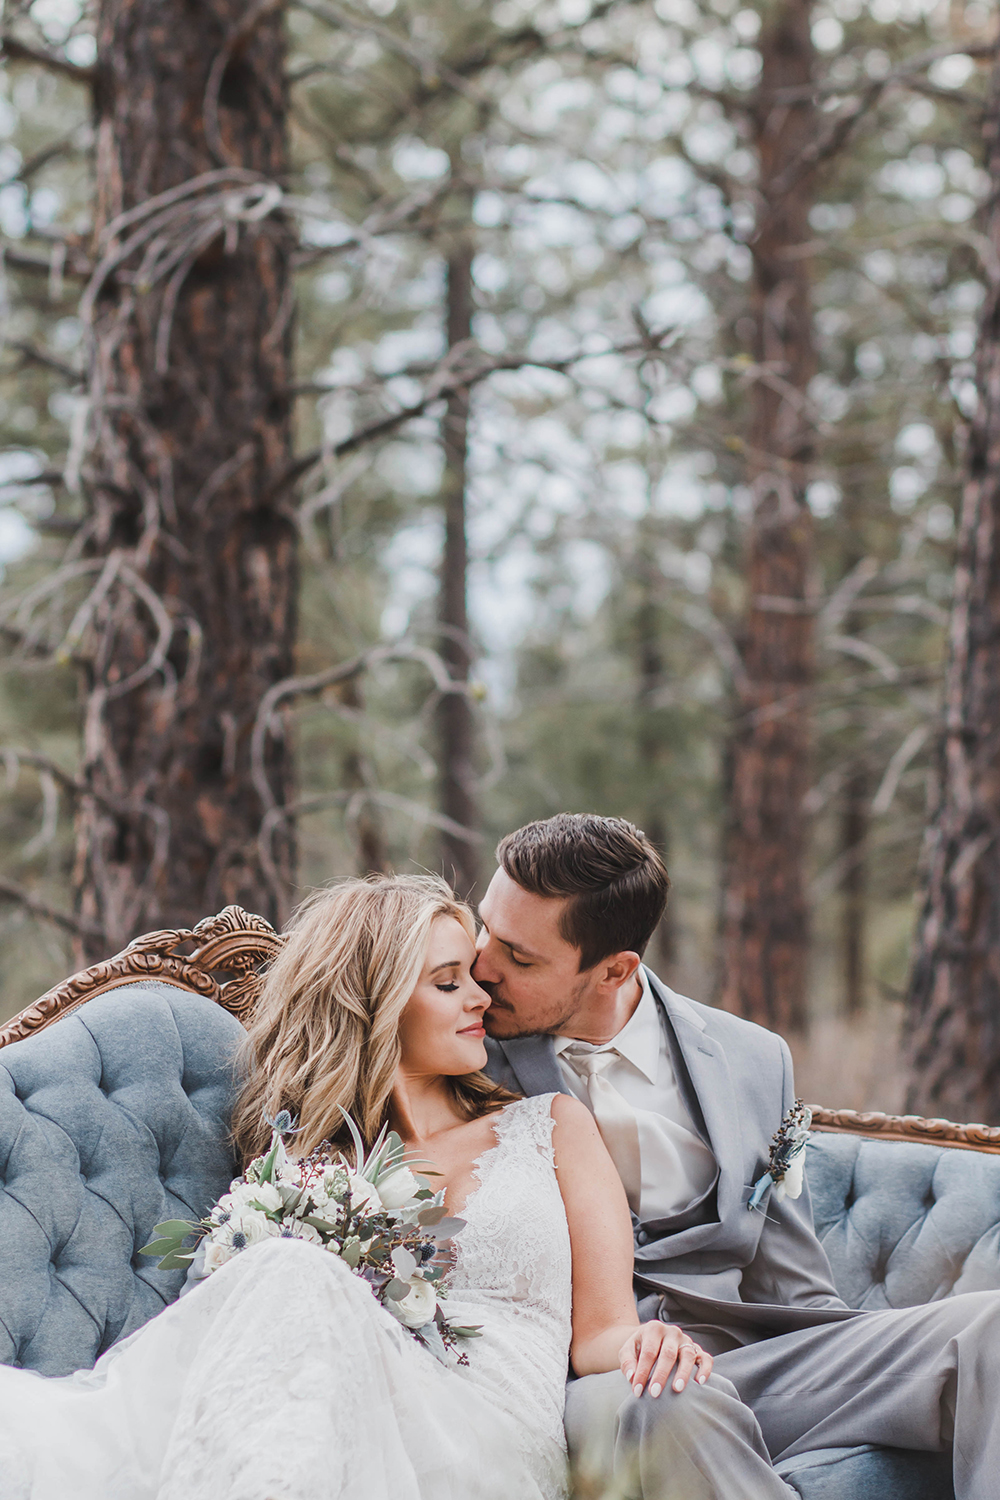 Rustic Wedding Style Shoot Inspiration | Casablanca Bridal | Kaley Broberg Photography